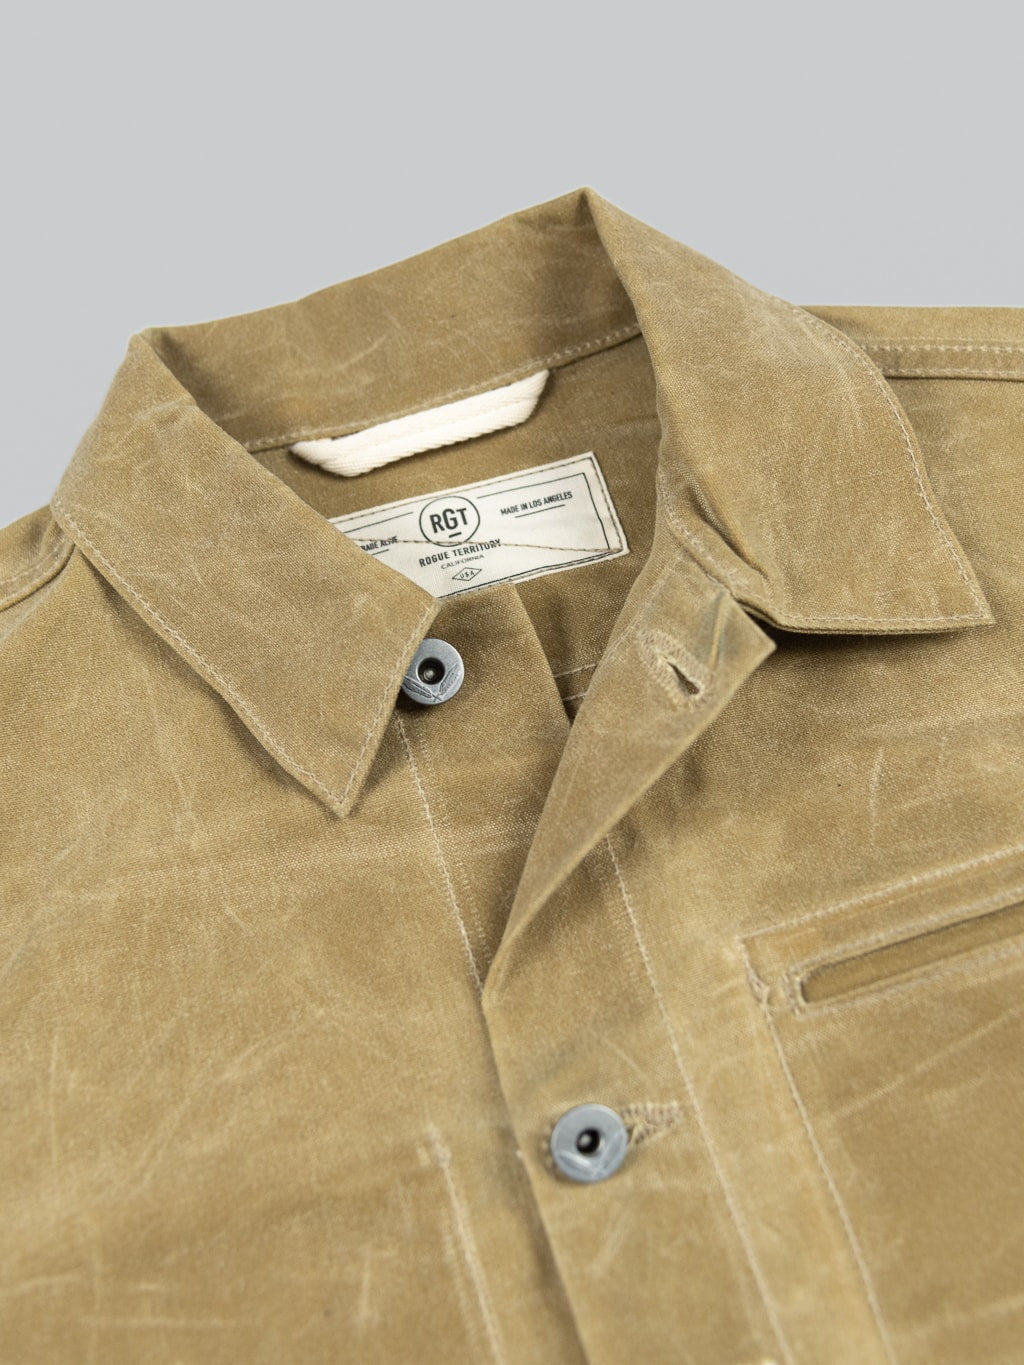 Rogue Territory Waxed Canvas Supply Jacket Tan Ridgeline collar details